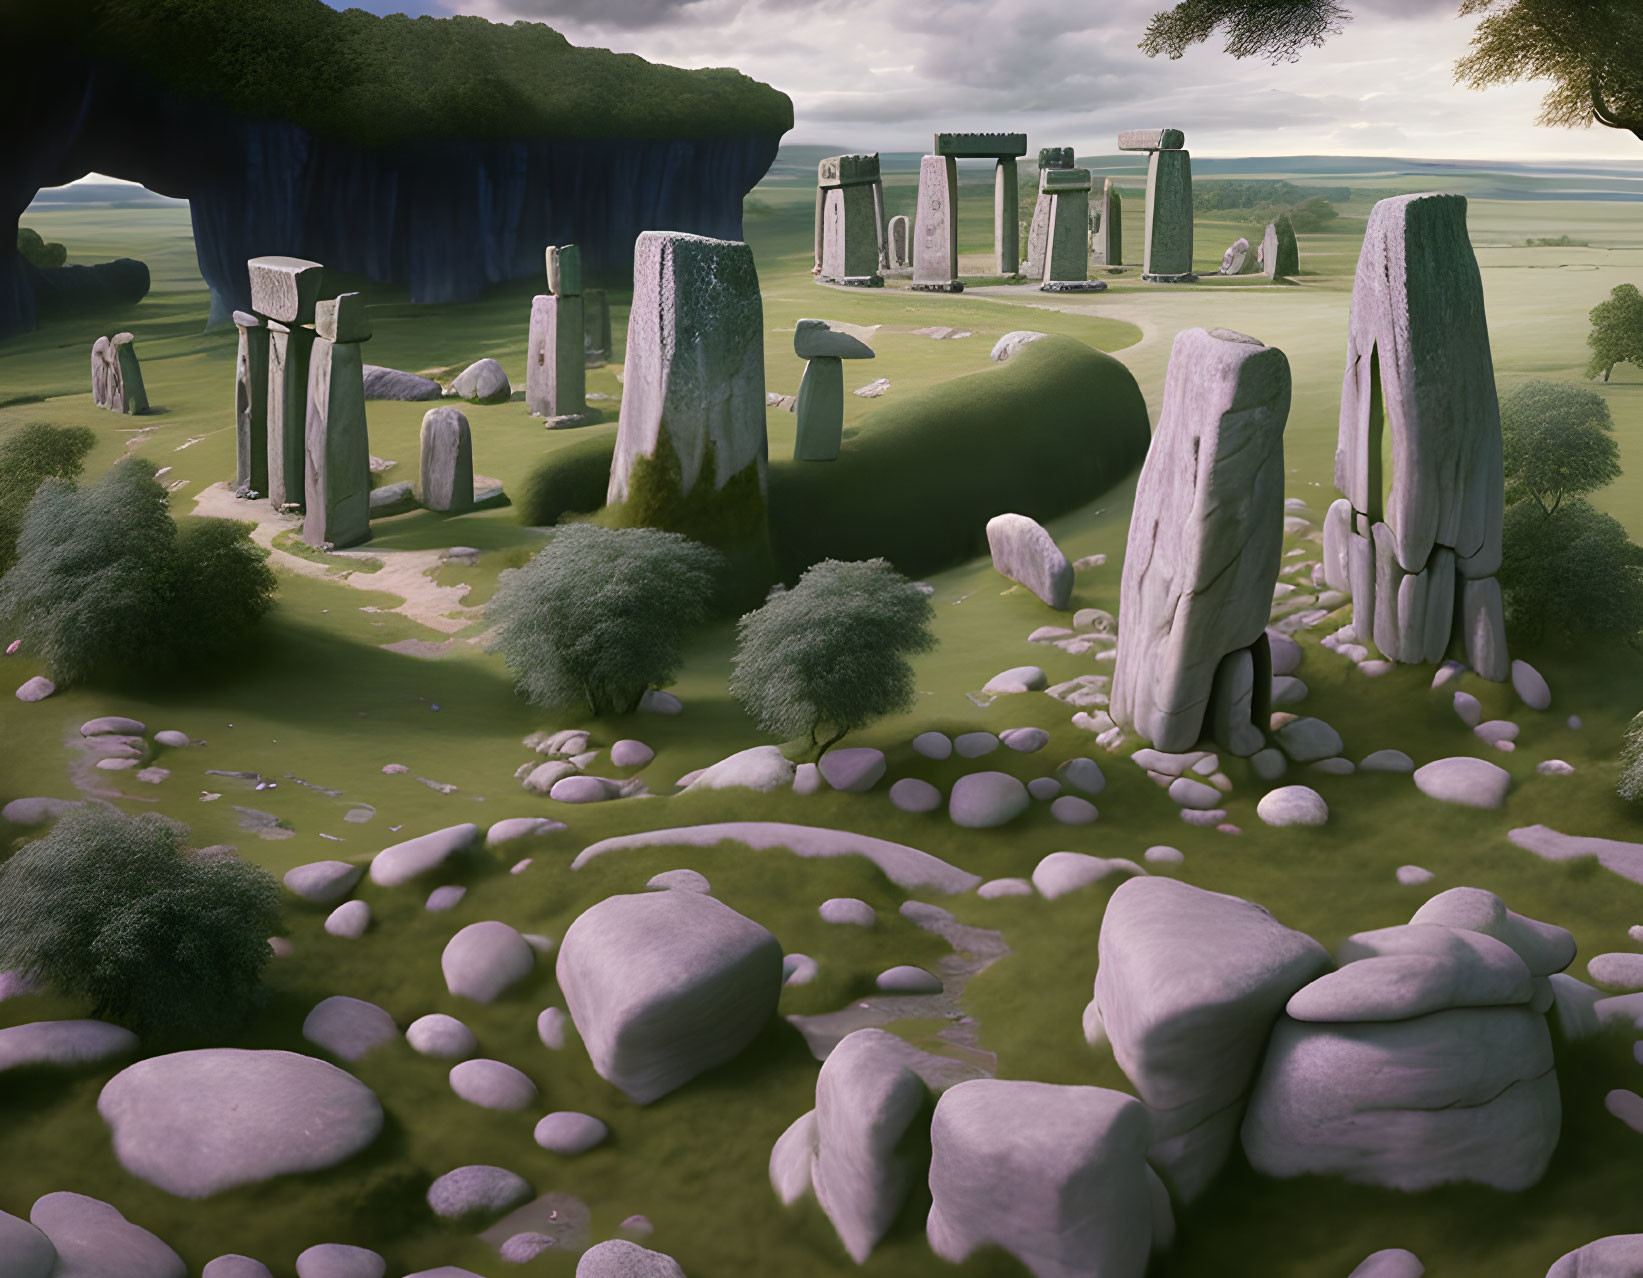 Surreal landscape with oversized Stonehenge-like rocks in green hills